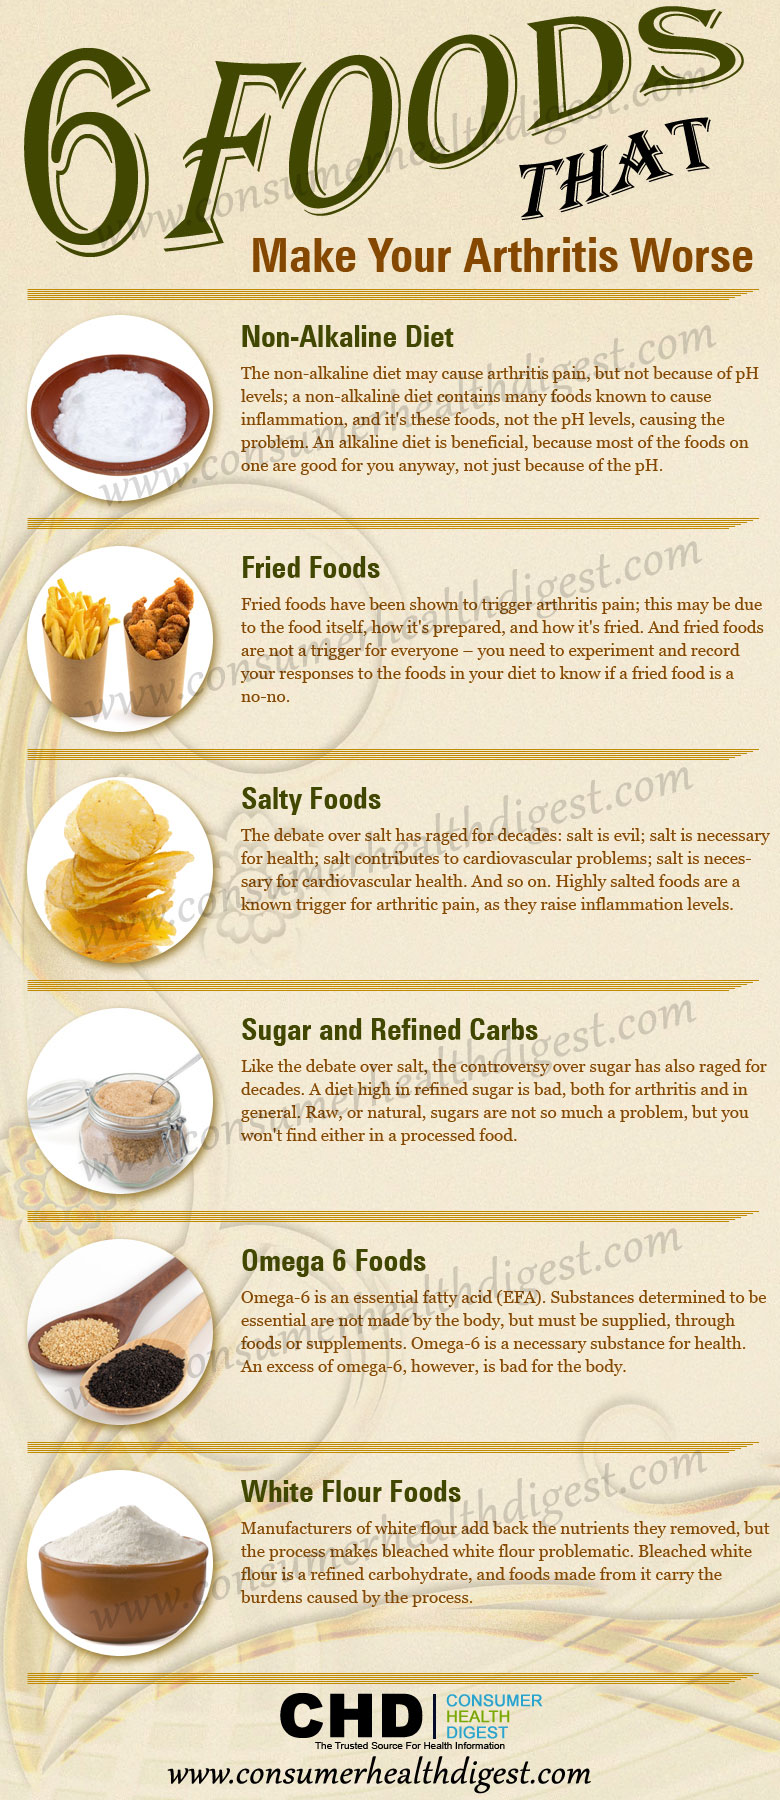 04 foods-that-make-your-arthri